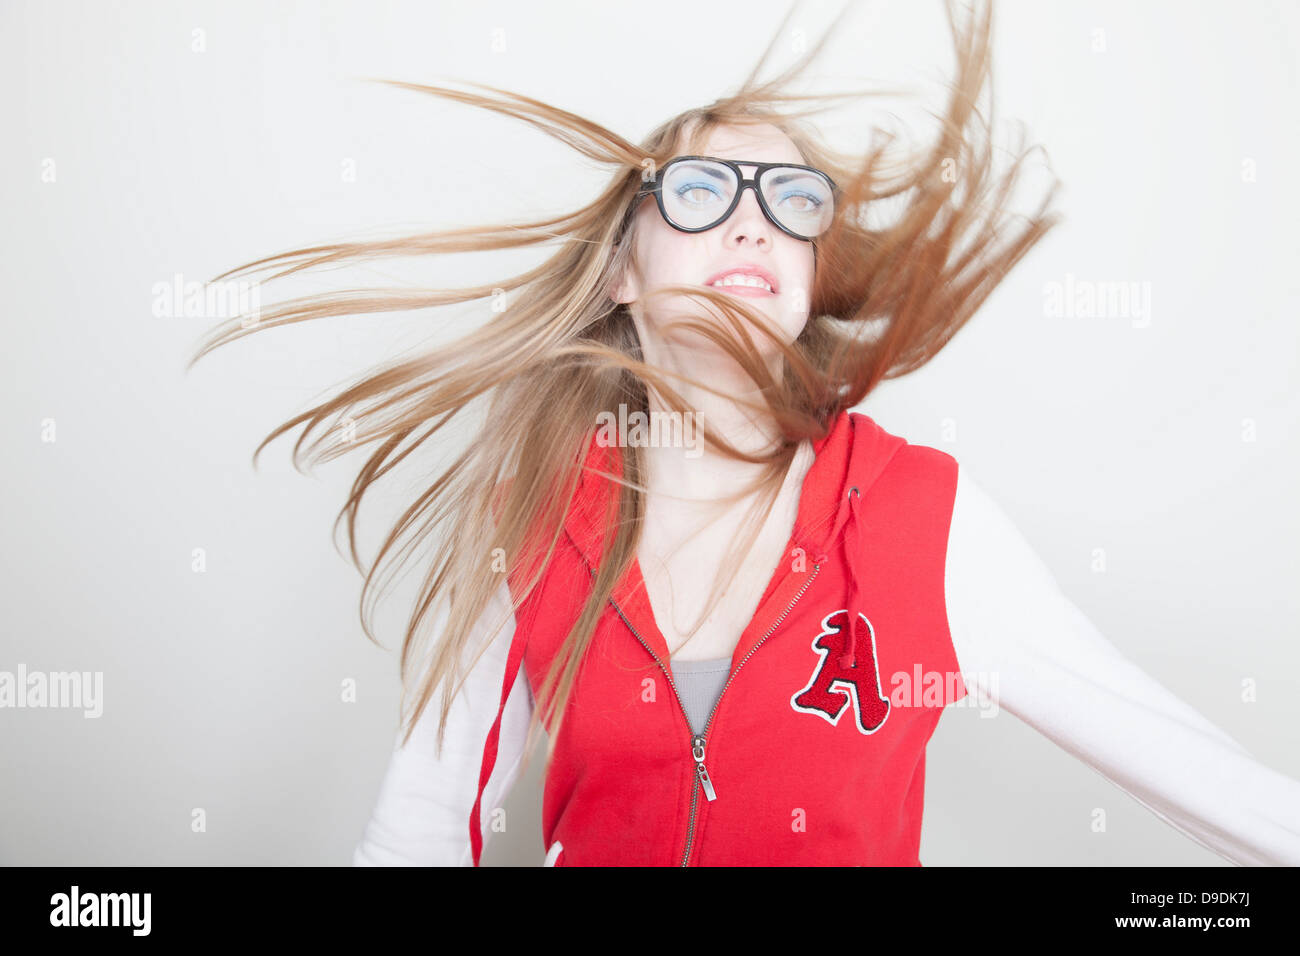 Girl wearing fake lunettes cheveux oscillante Banque D'Images